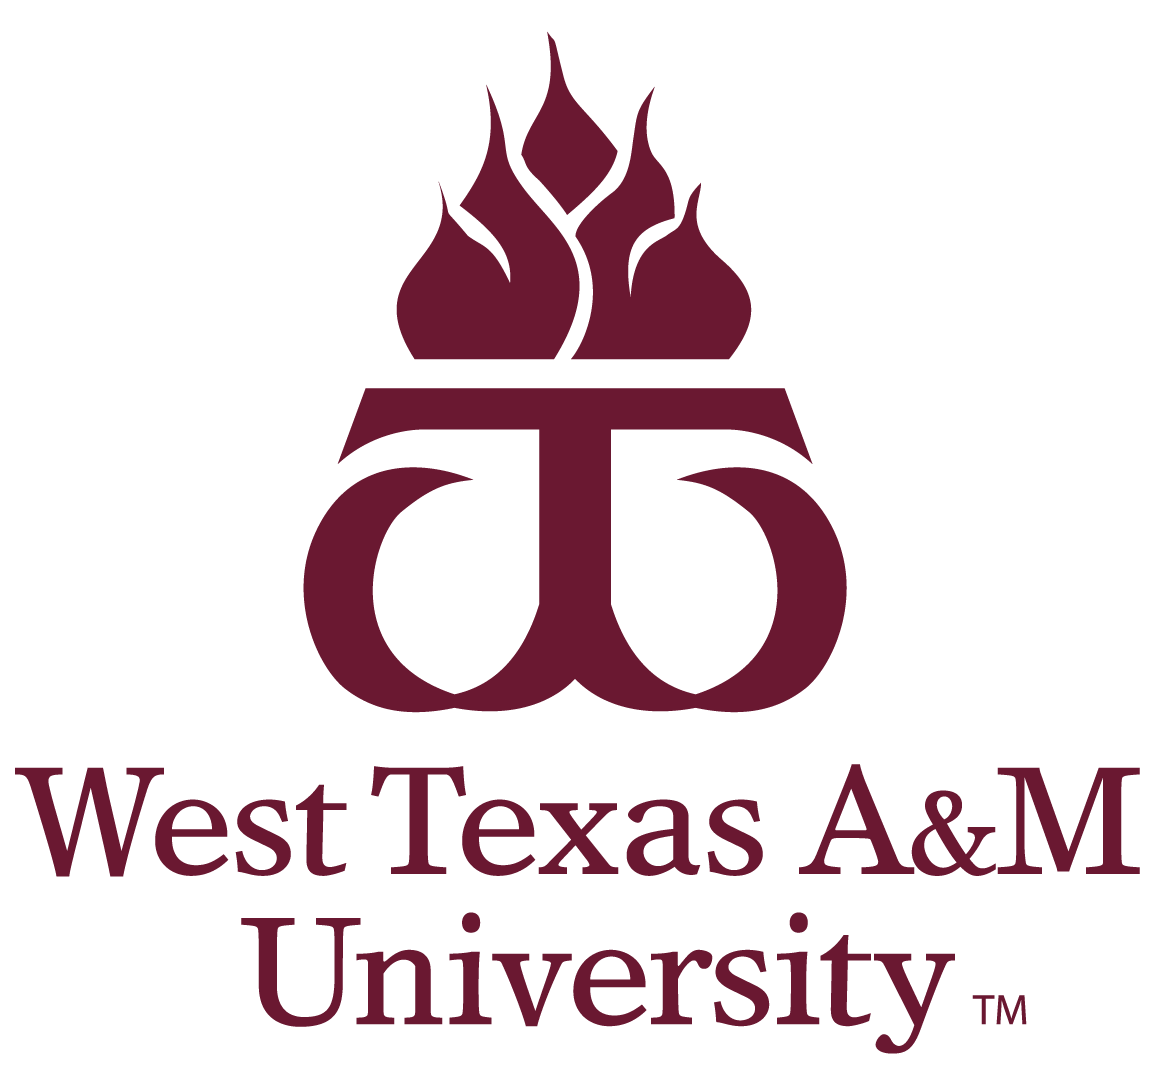 A&M University Logo - West Texas A&M University: Graphic Standard New